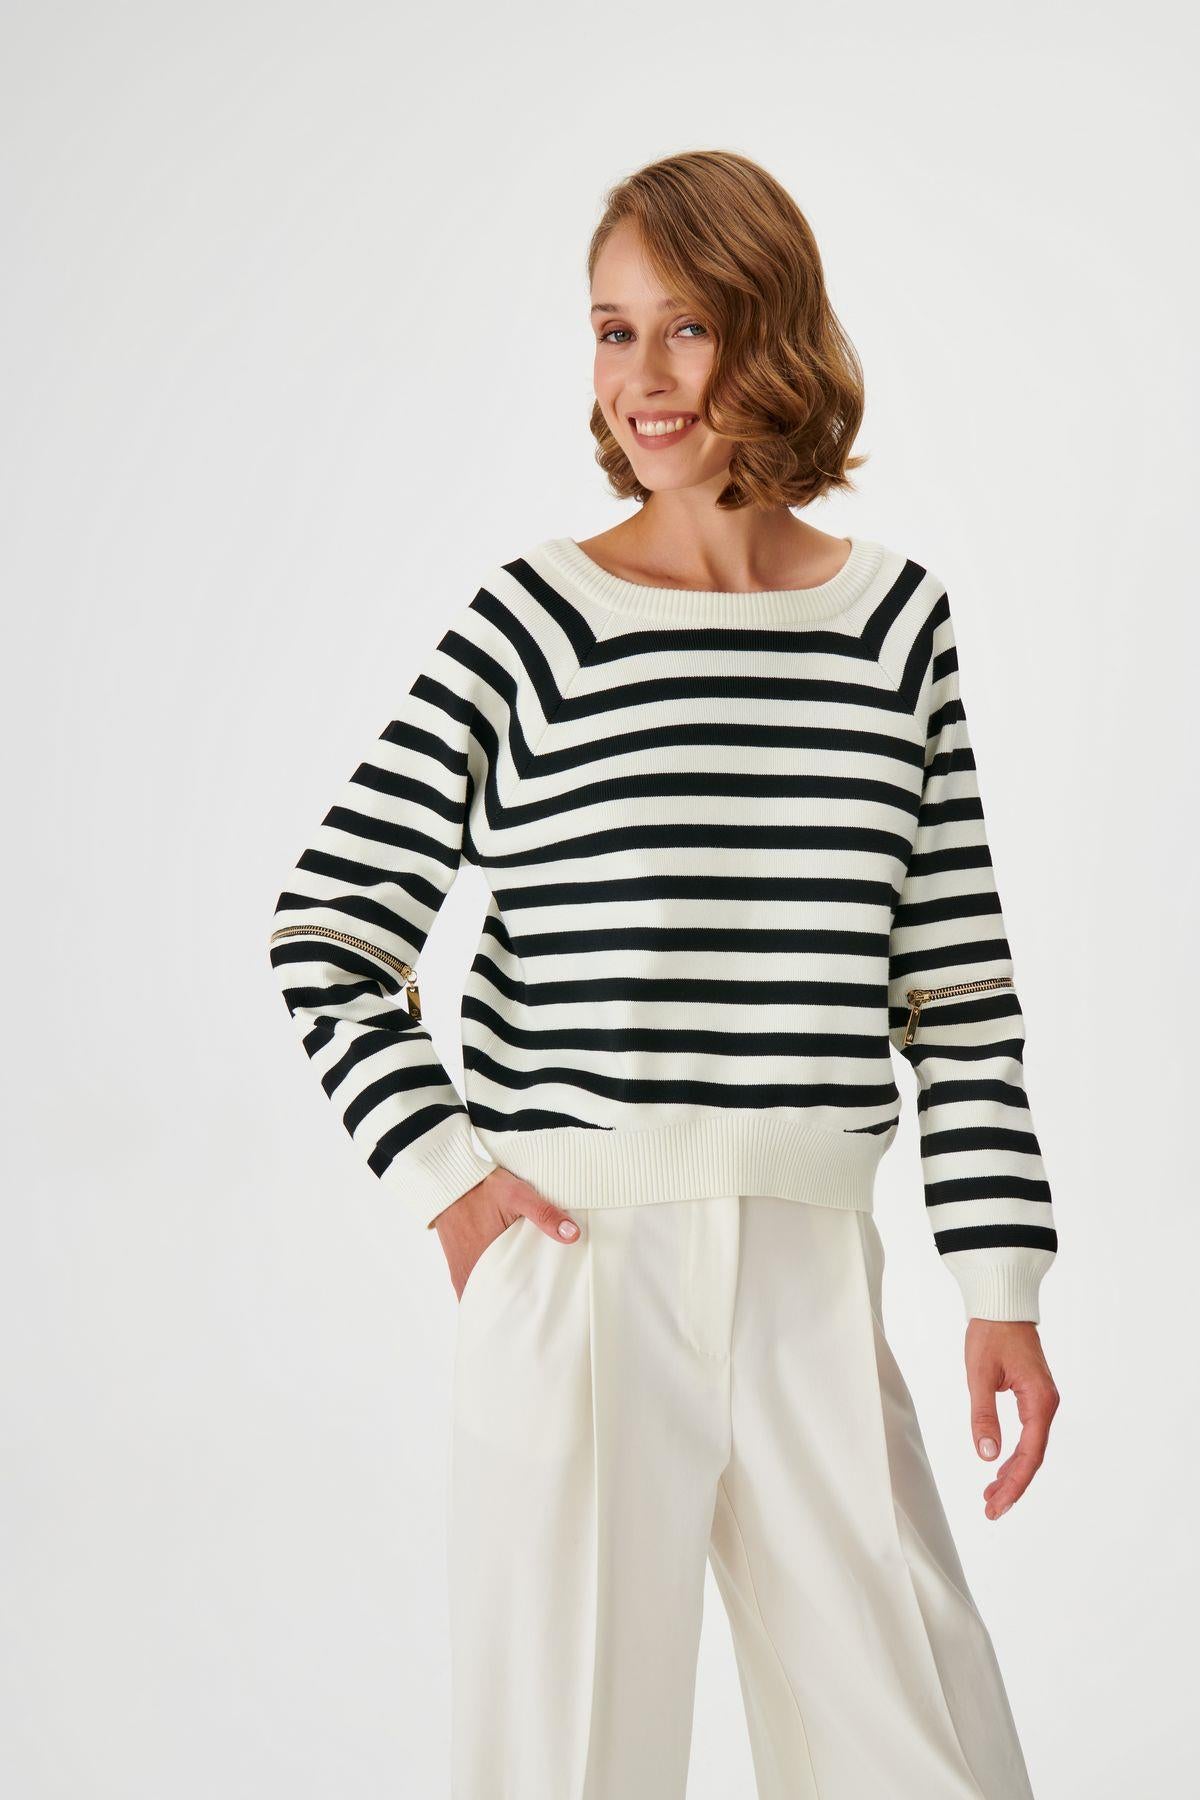 Black White Striped Knitwear Sweater with Zipper Detail